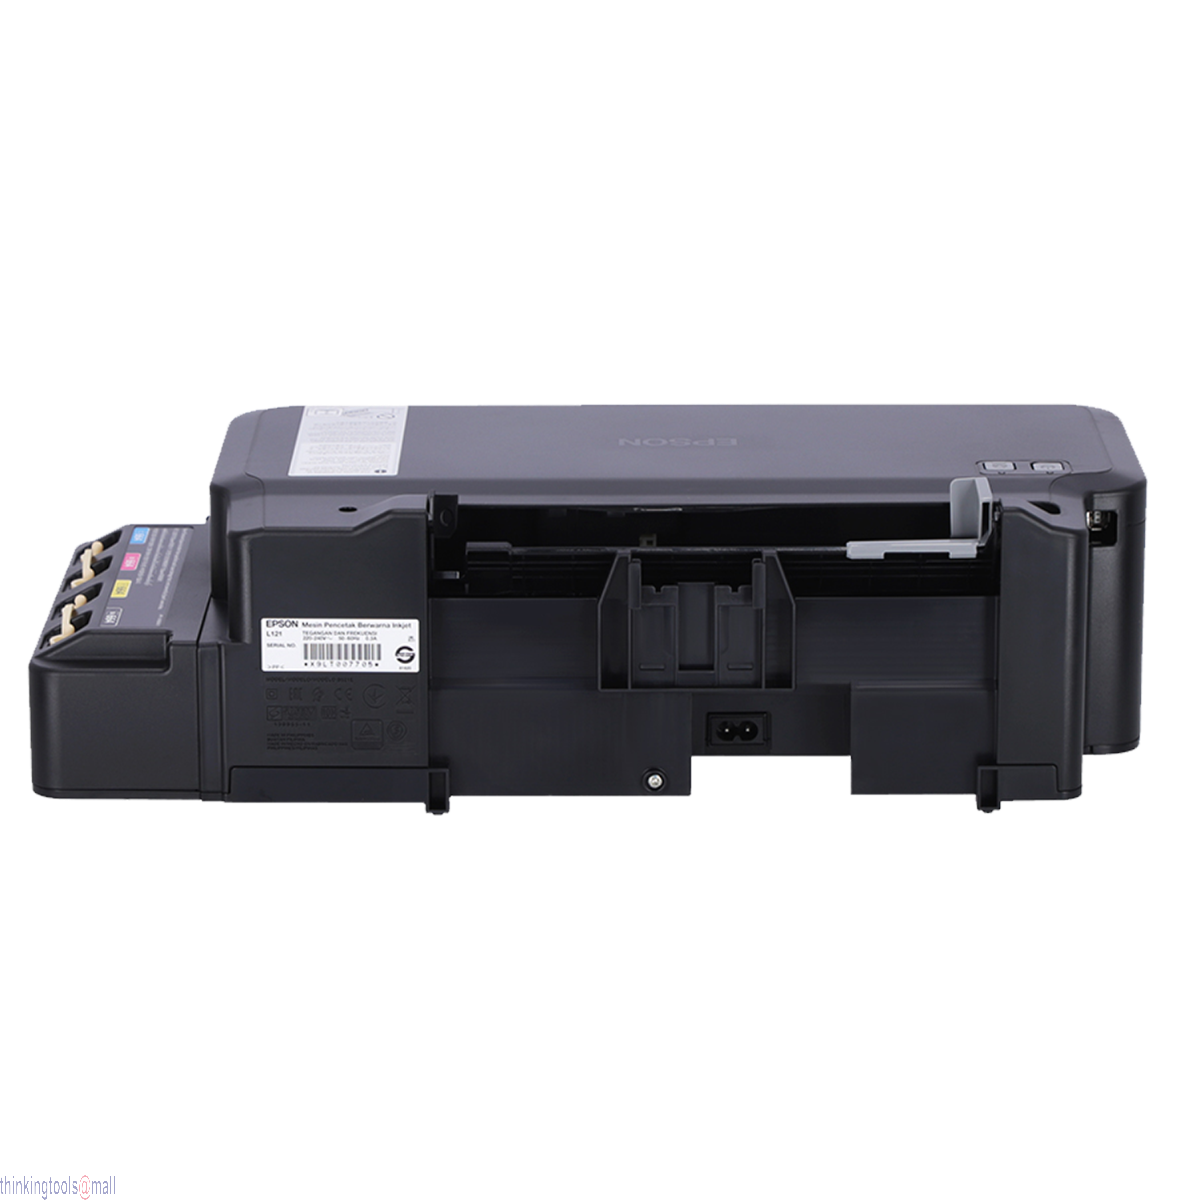 Epson L121 Ink Tank Printer